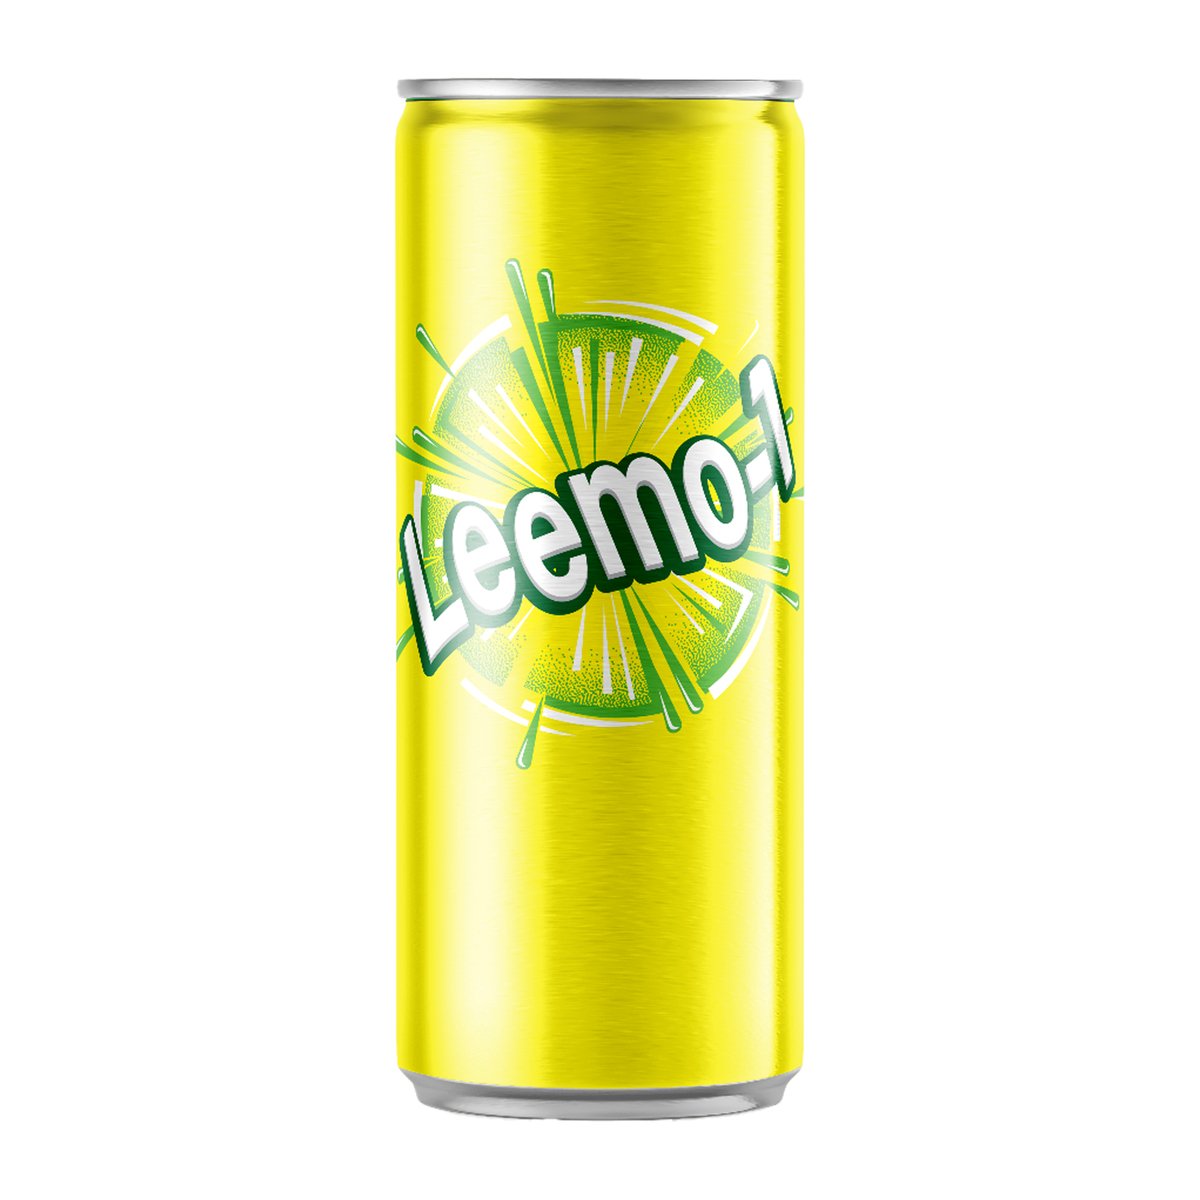 Fifa Leemo-1 Soft Drink 30 x 250 ml